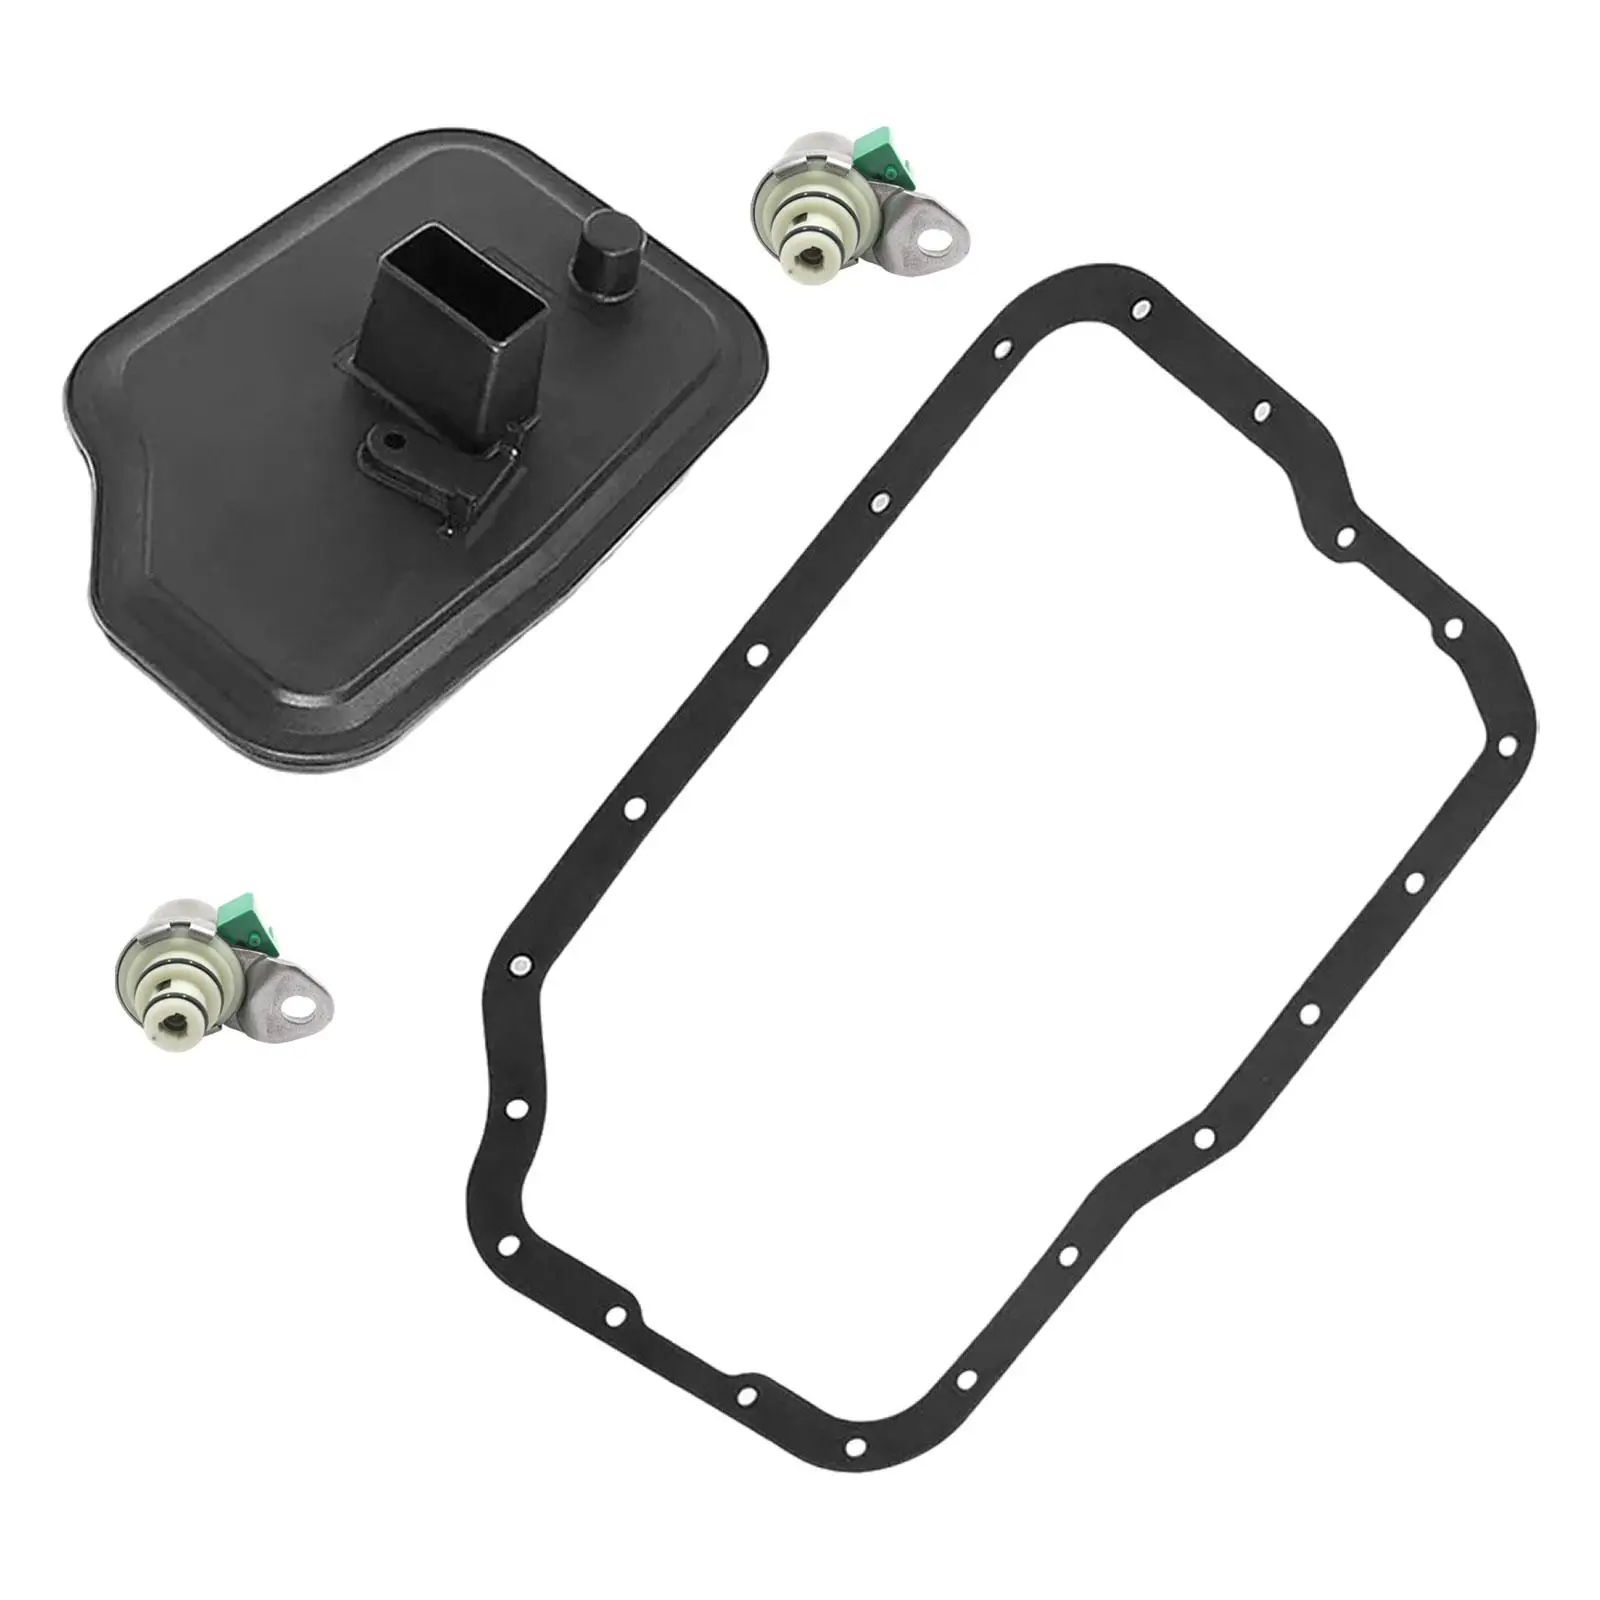 Transmission Filter Pan Gasket Kit Transmission Shift Solenoid Kit for Ford Mazda Replaces Premium Convenient Installation